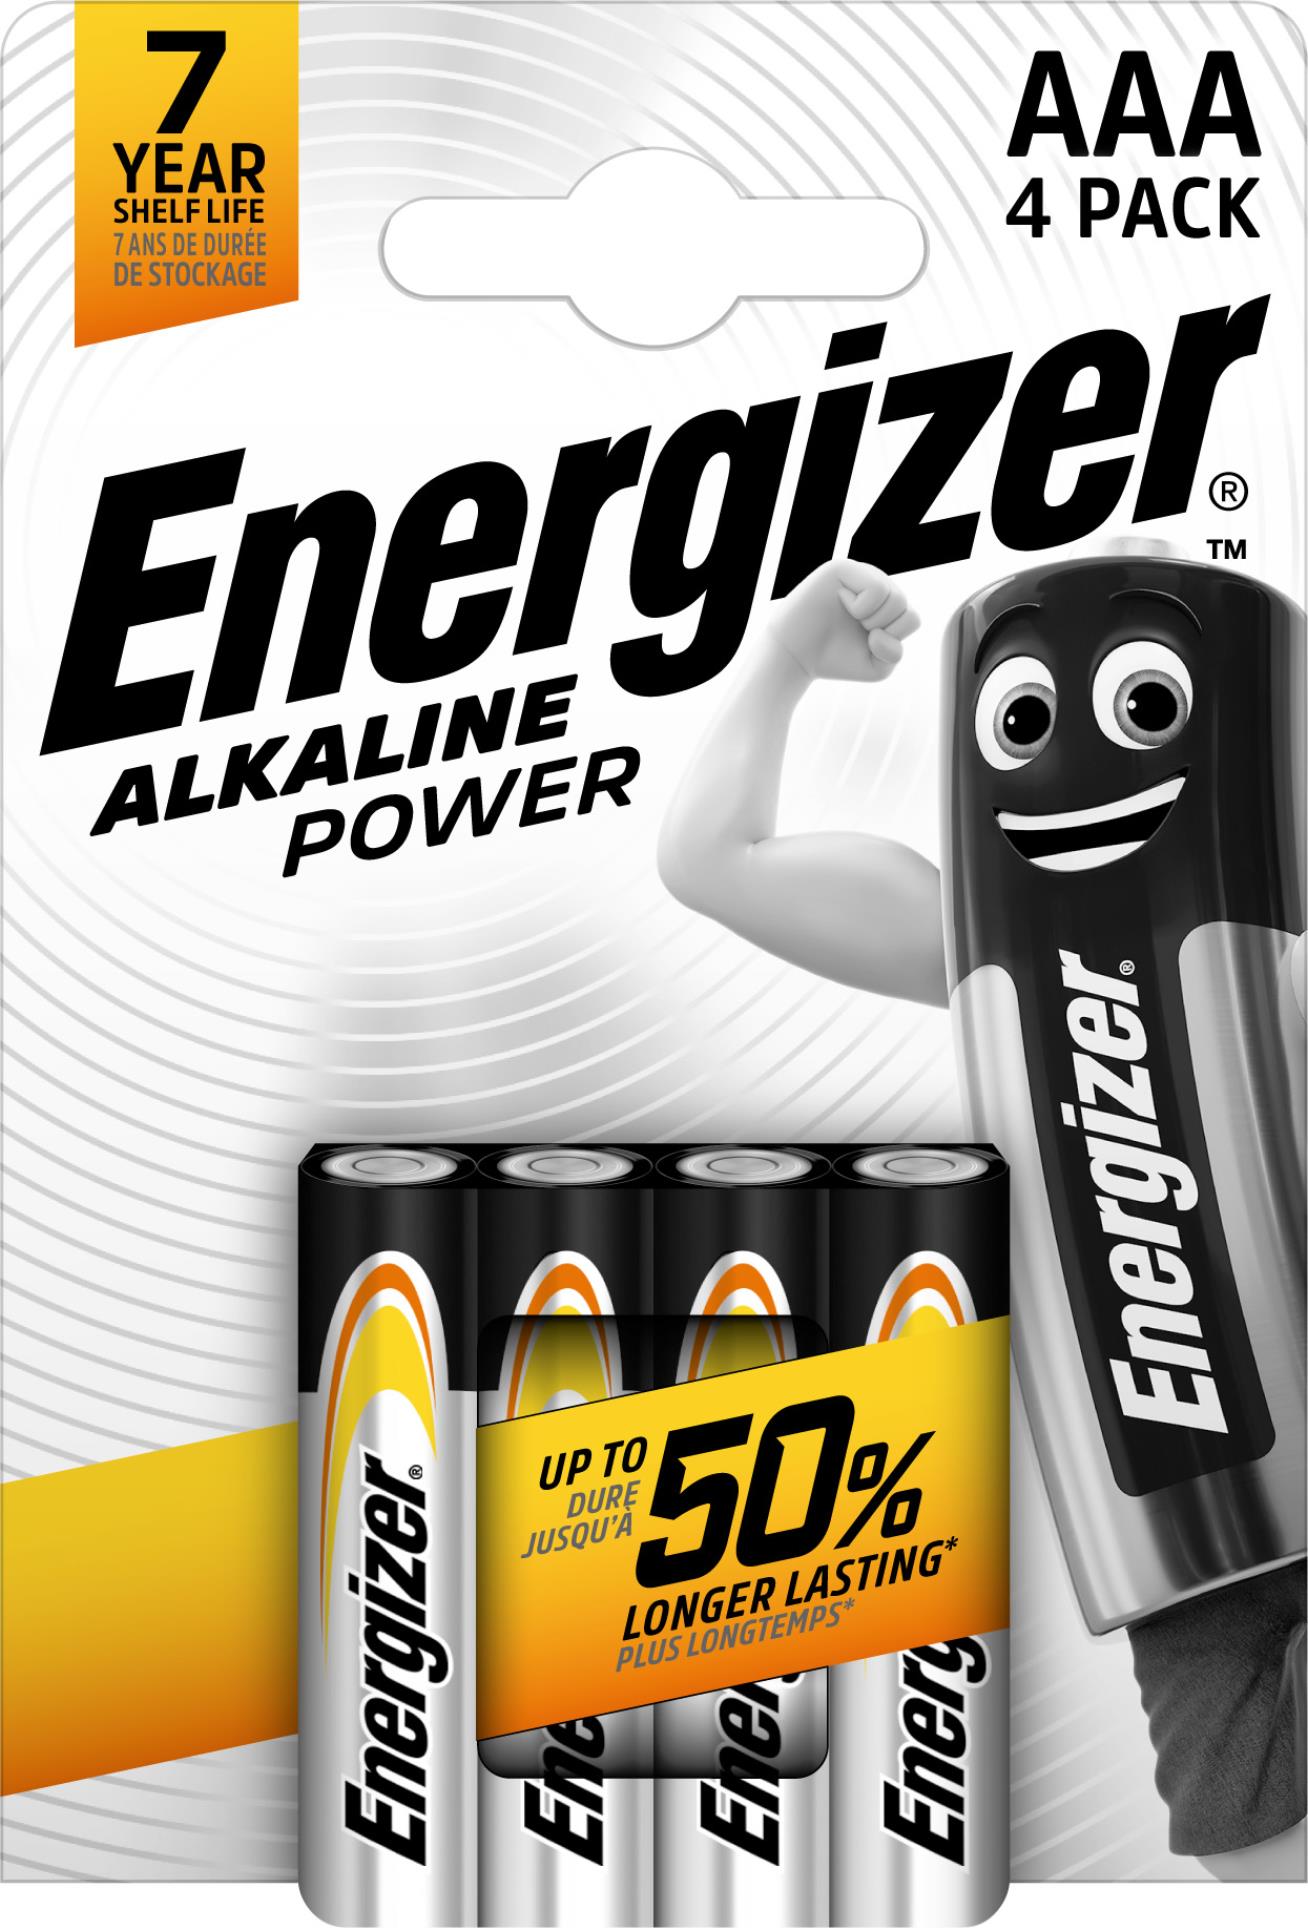 Alkalické baterie Energizer Power - 1,5 V, typ AAA, 4 ks